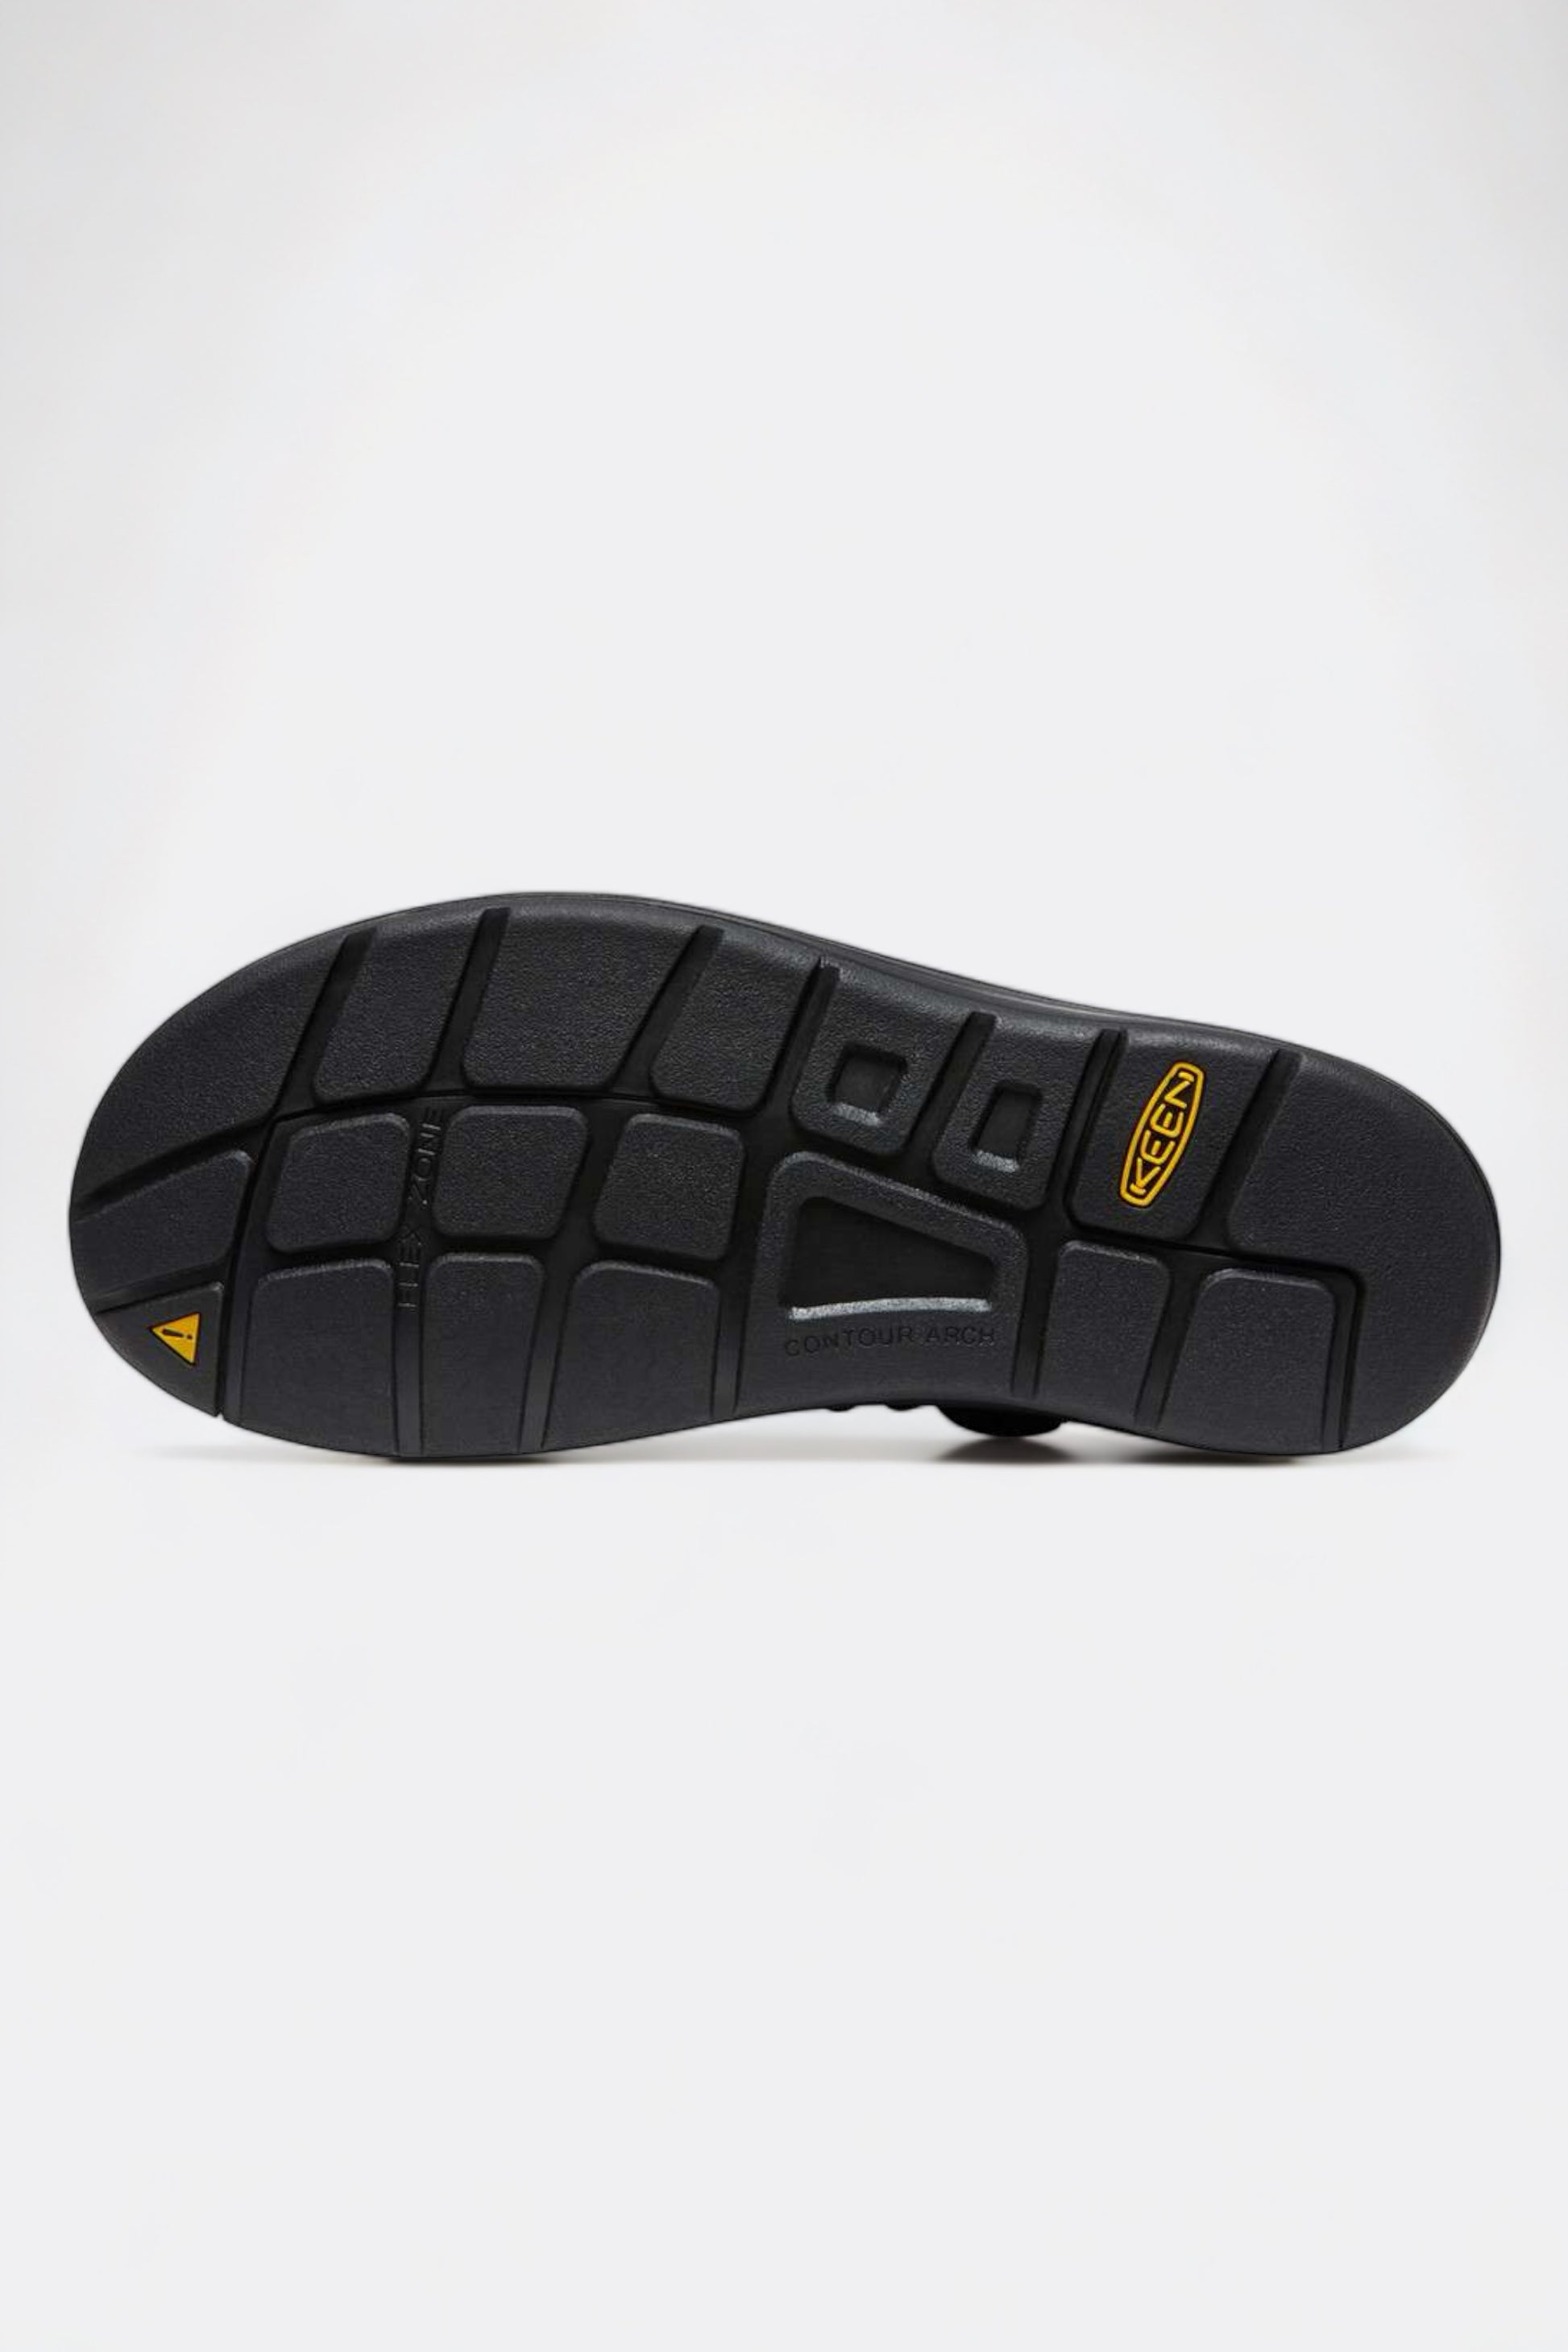 Keen - Uneek Sandals (Black / Black)